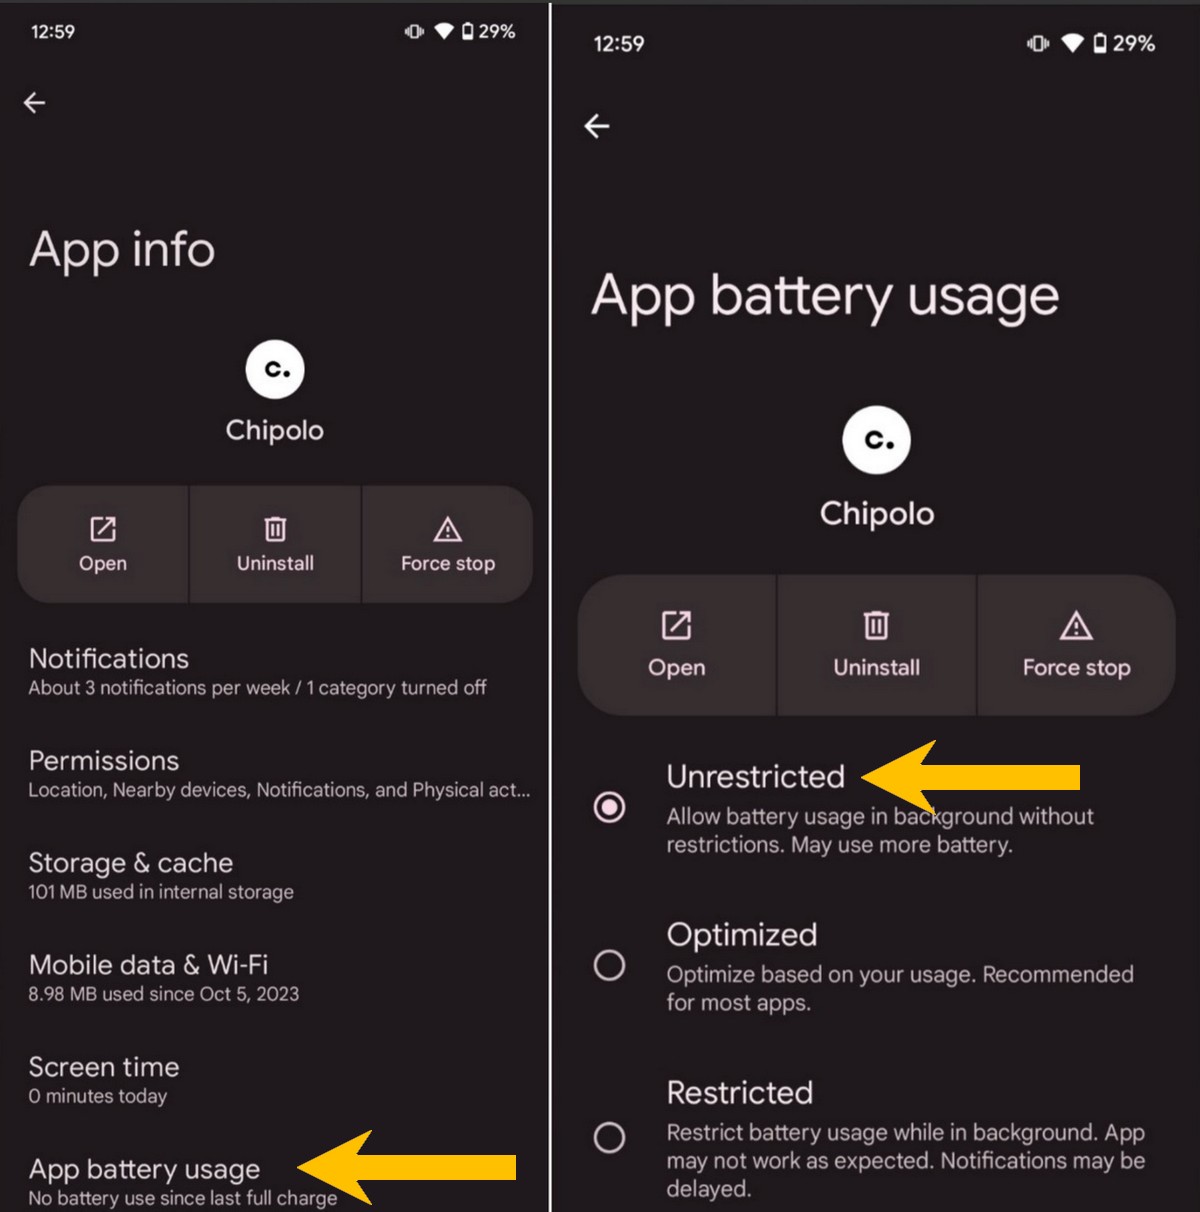 App battery usage option